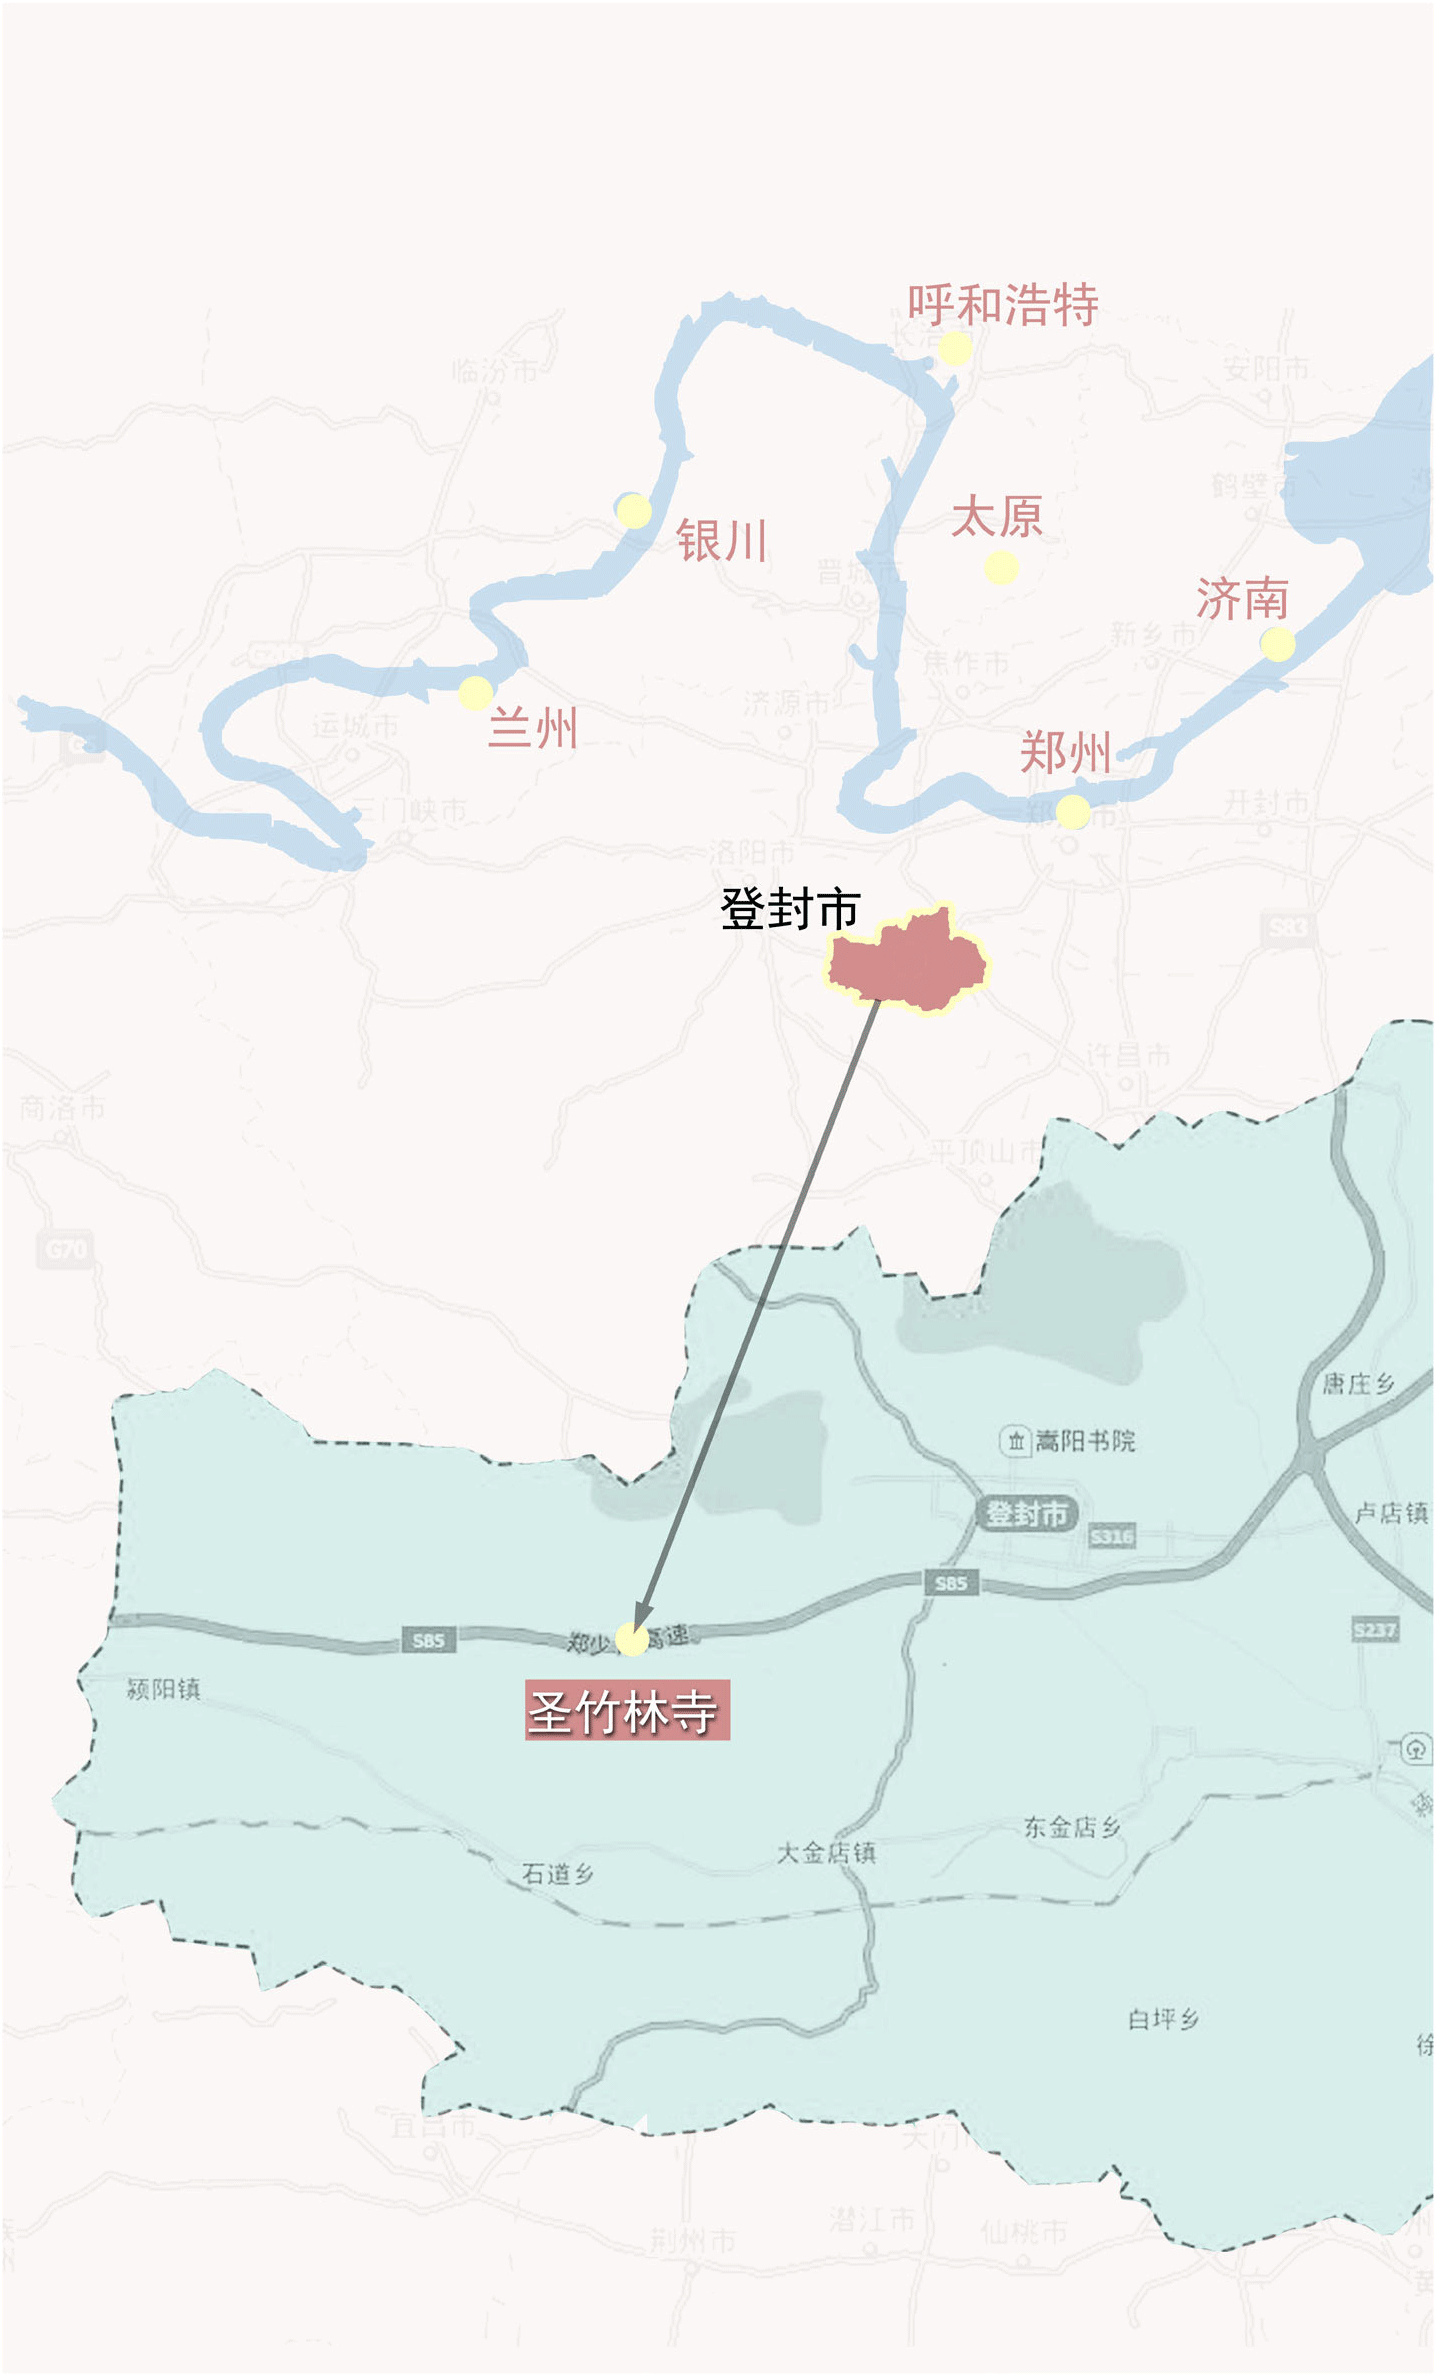 Master plan of shengzhulin temple in Dengfeng Henan Province(图6)